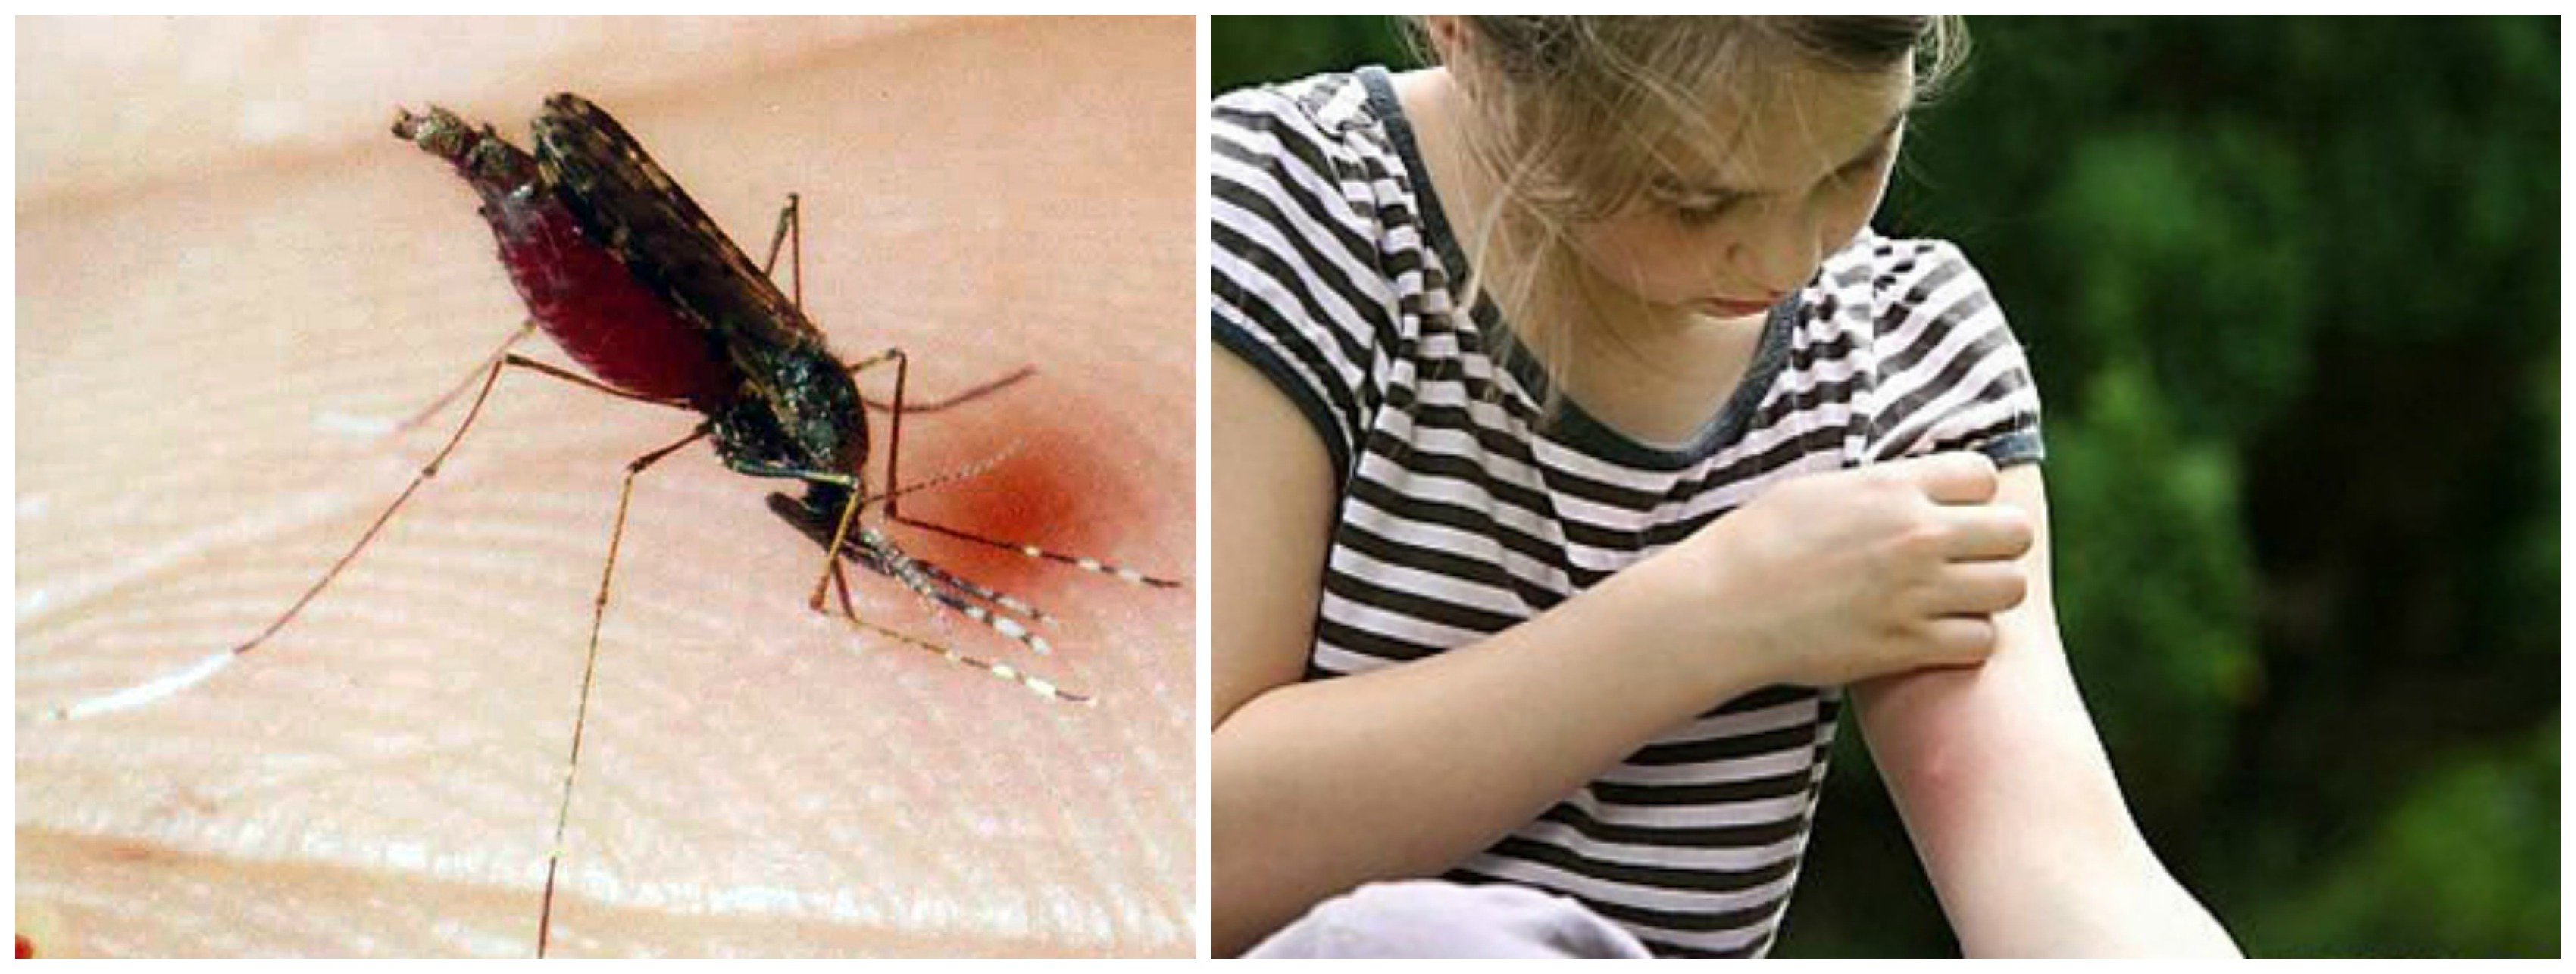 allergiya na ukusy komarov u detejj: lechenie, simptomy, foto, prichiny, silnaya allergiya u rebenka37 Алергія на укуси комарів у дітей: лікування, симптоми, фото, причини, сильна алергія у дитини